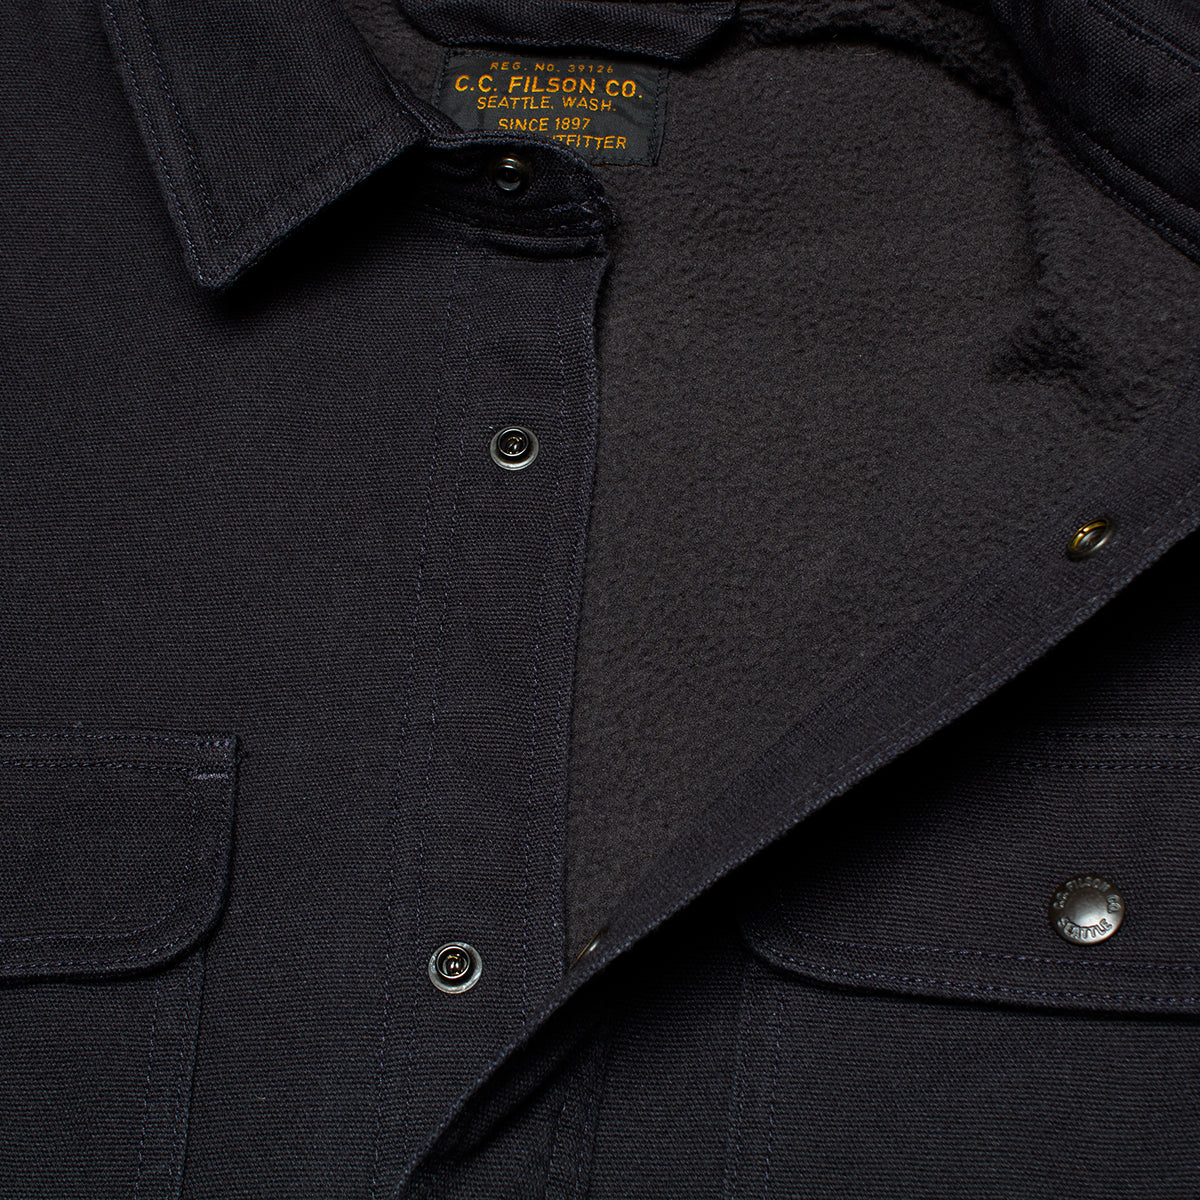 Filson Fleece Lined Jac-Shirt : Dark Navy